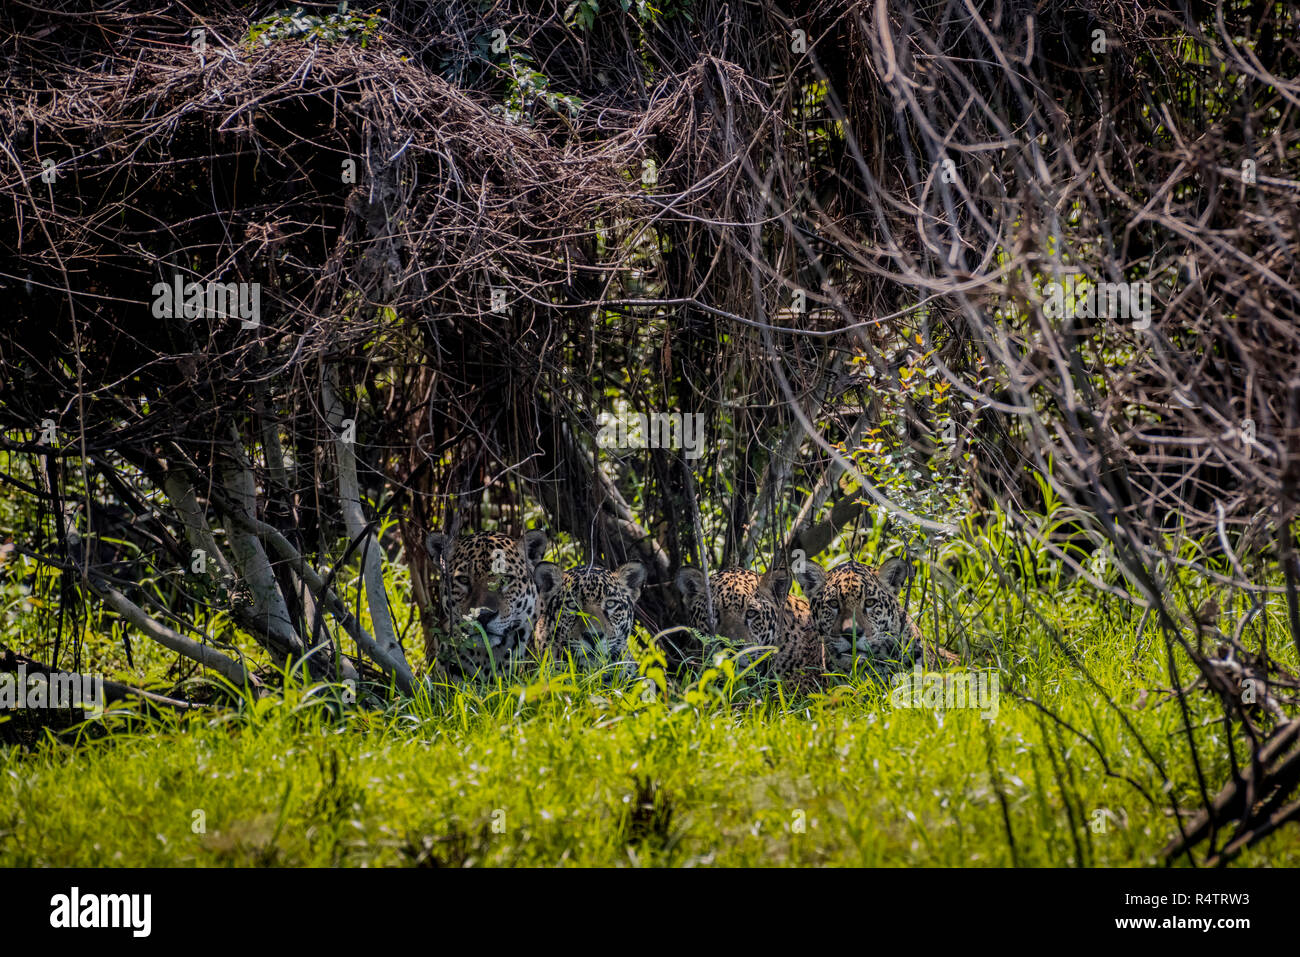 Four Jaguars (Panthera onca) hidden in dense vegetation in the bushes, Barranco Alto, Pantanal, Mato Grosso do Sul, Brazil Stock Photo